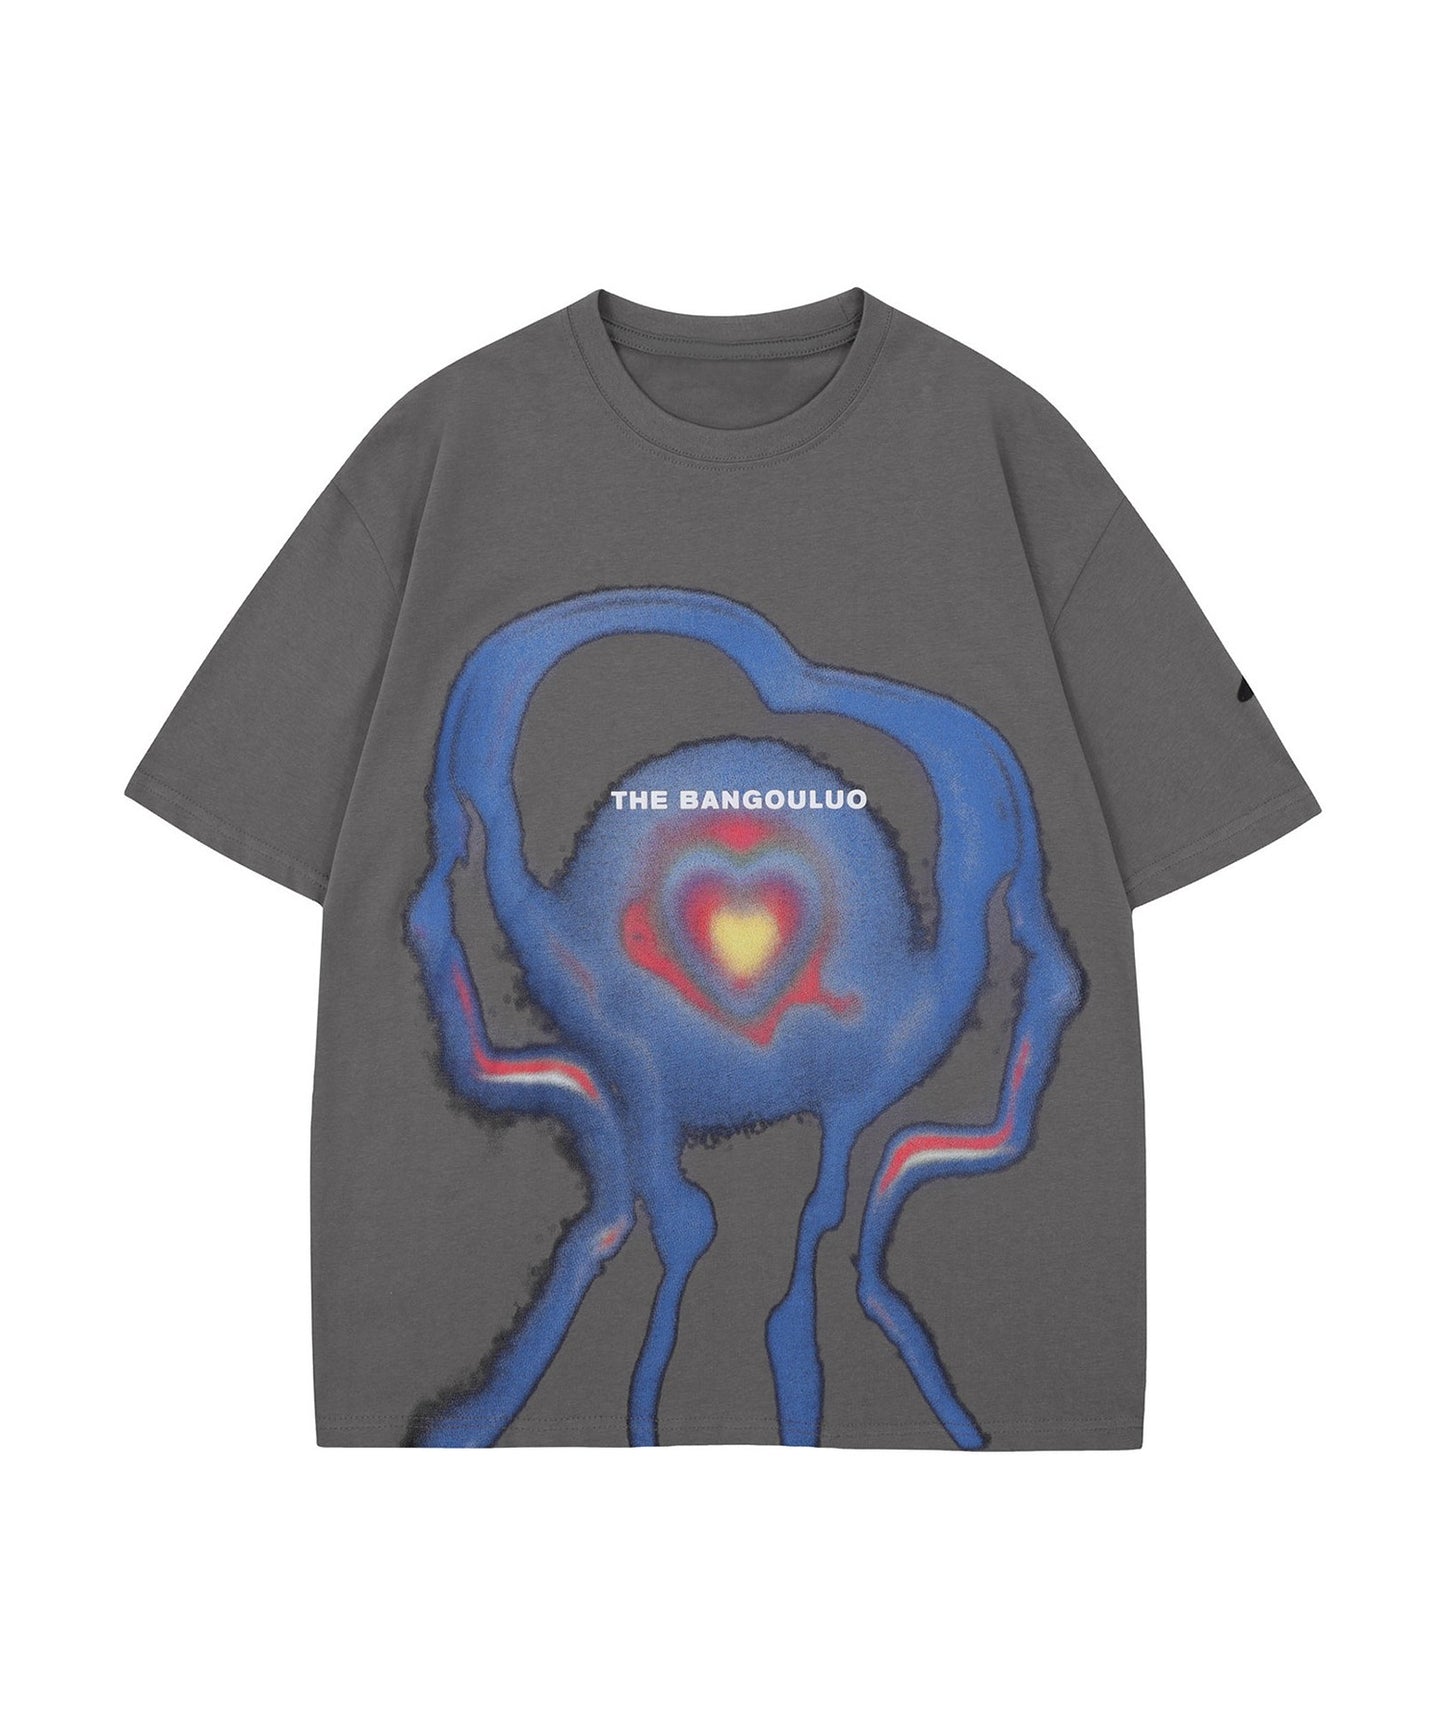 【HOOK】個性派抽象画プリント半袖ビッグTシャツ